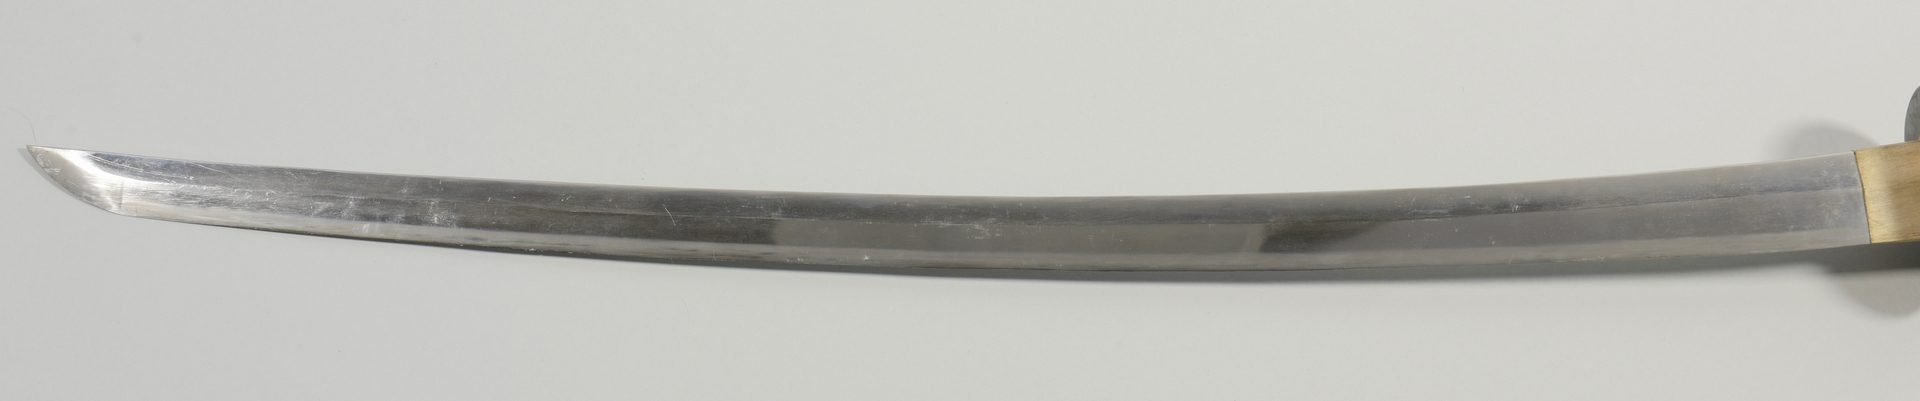 Lot 314: WWII Era Japanese Naval Officer's Sword